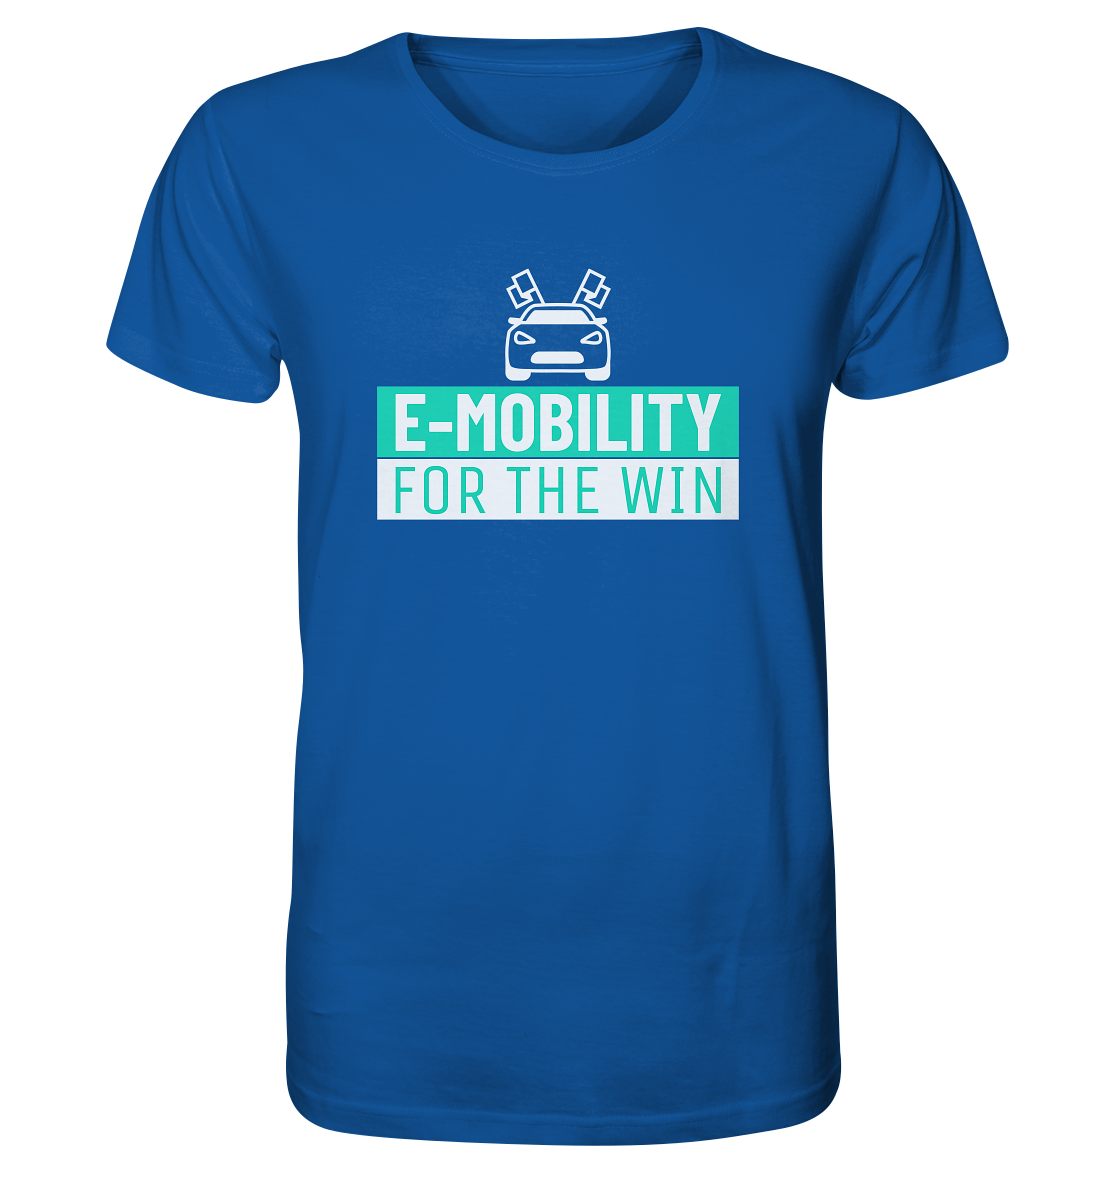 E-Mobility for the win ORGANIC - Organic Shirt